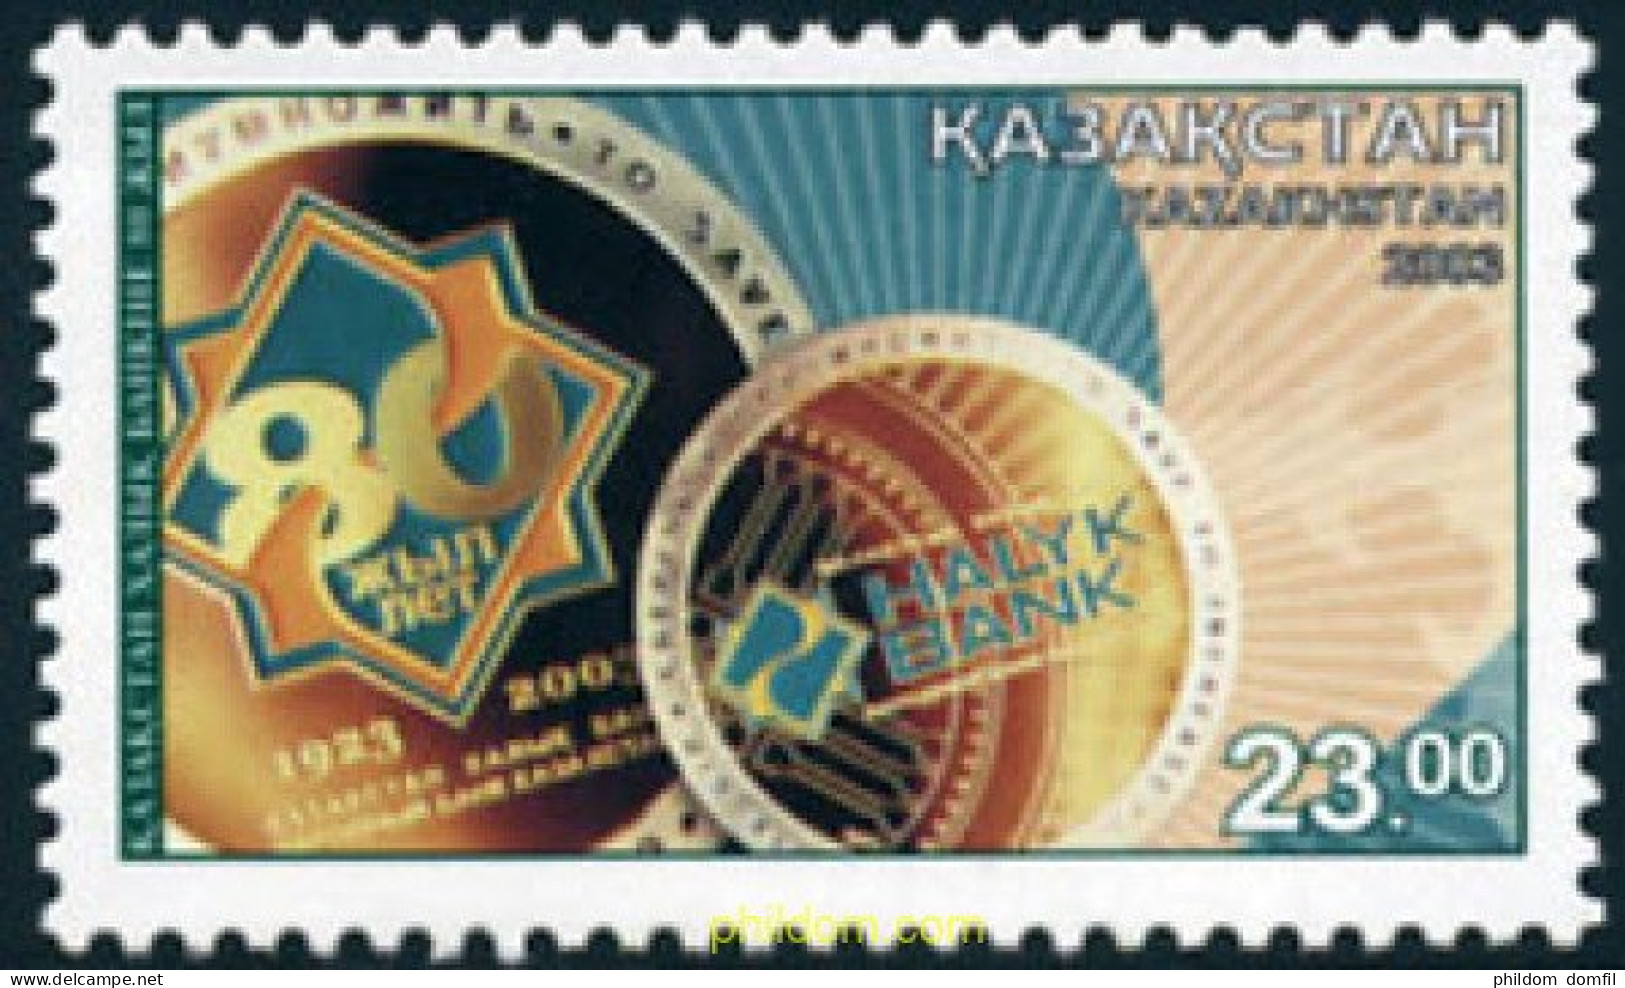 148989 MNH KAZAJSTAN 2003 80 ANIVERSARIO DEL BANCO HALYK - Kazachstan